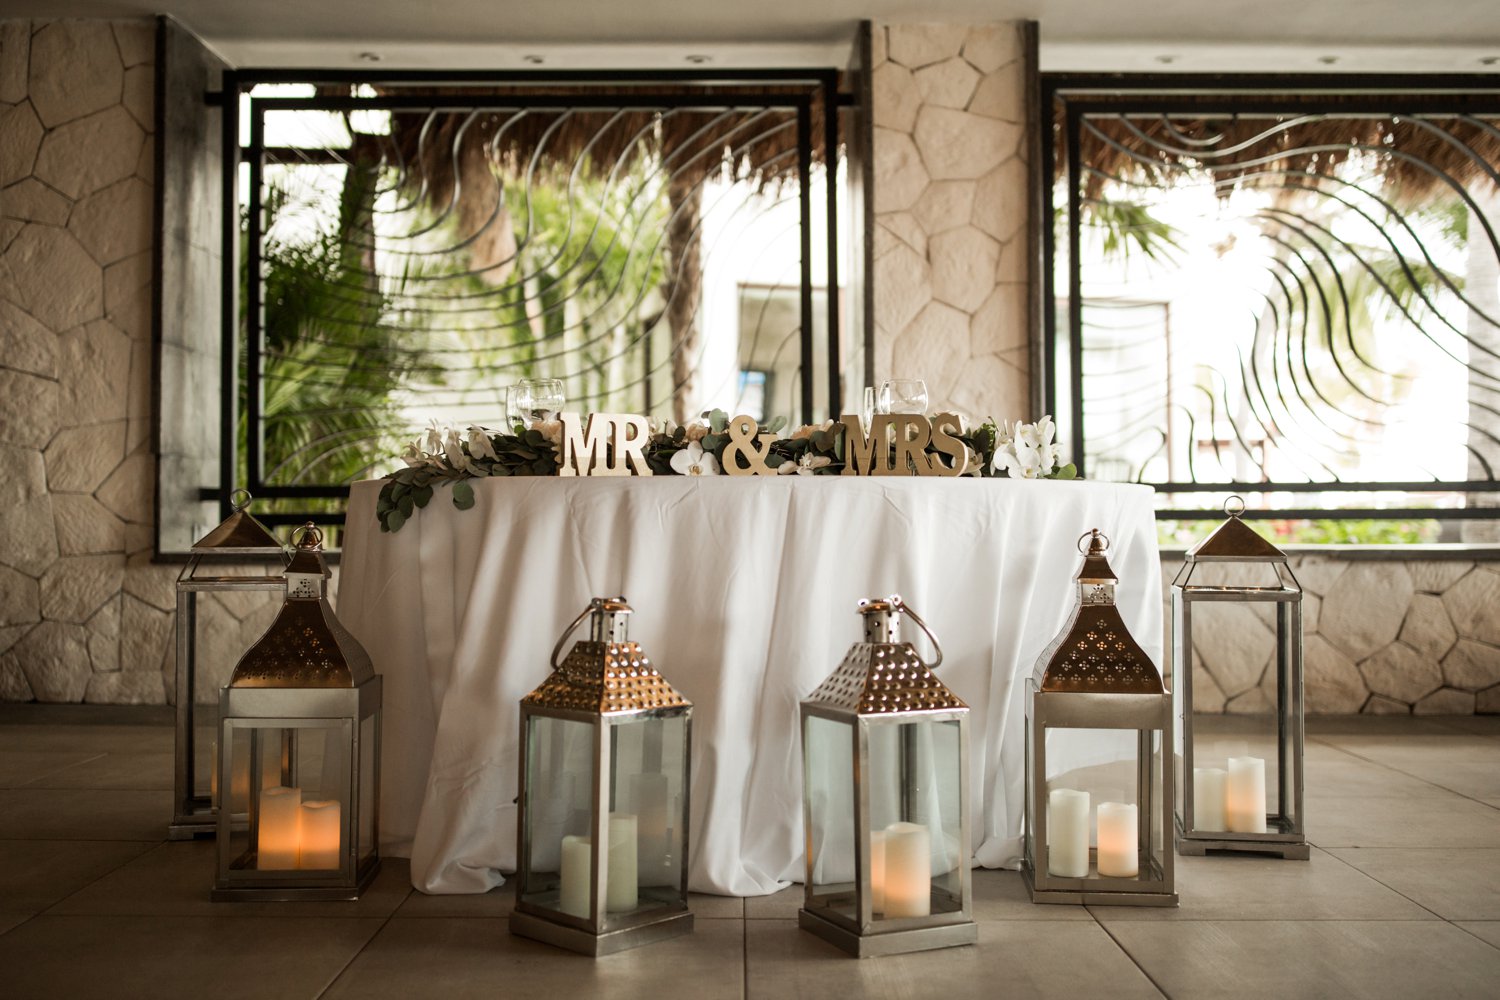  images by feliciathephotographer.com | destination wedding photographer | mexico | tropical | fiji | venue | azul beach resort | riviera maya | reception | details | head table | gold and white | candles | palm trees | 